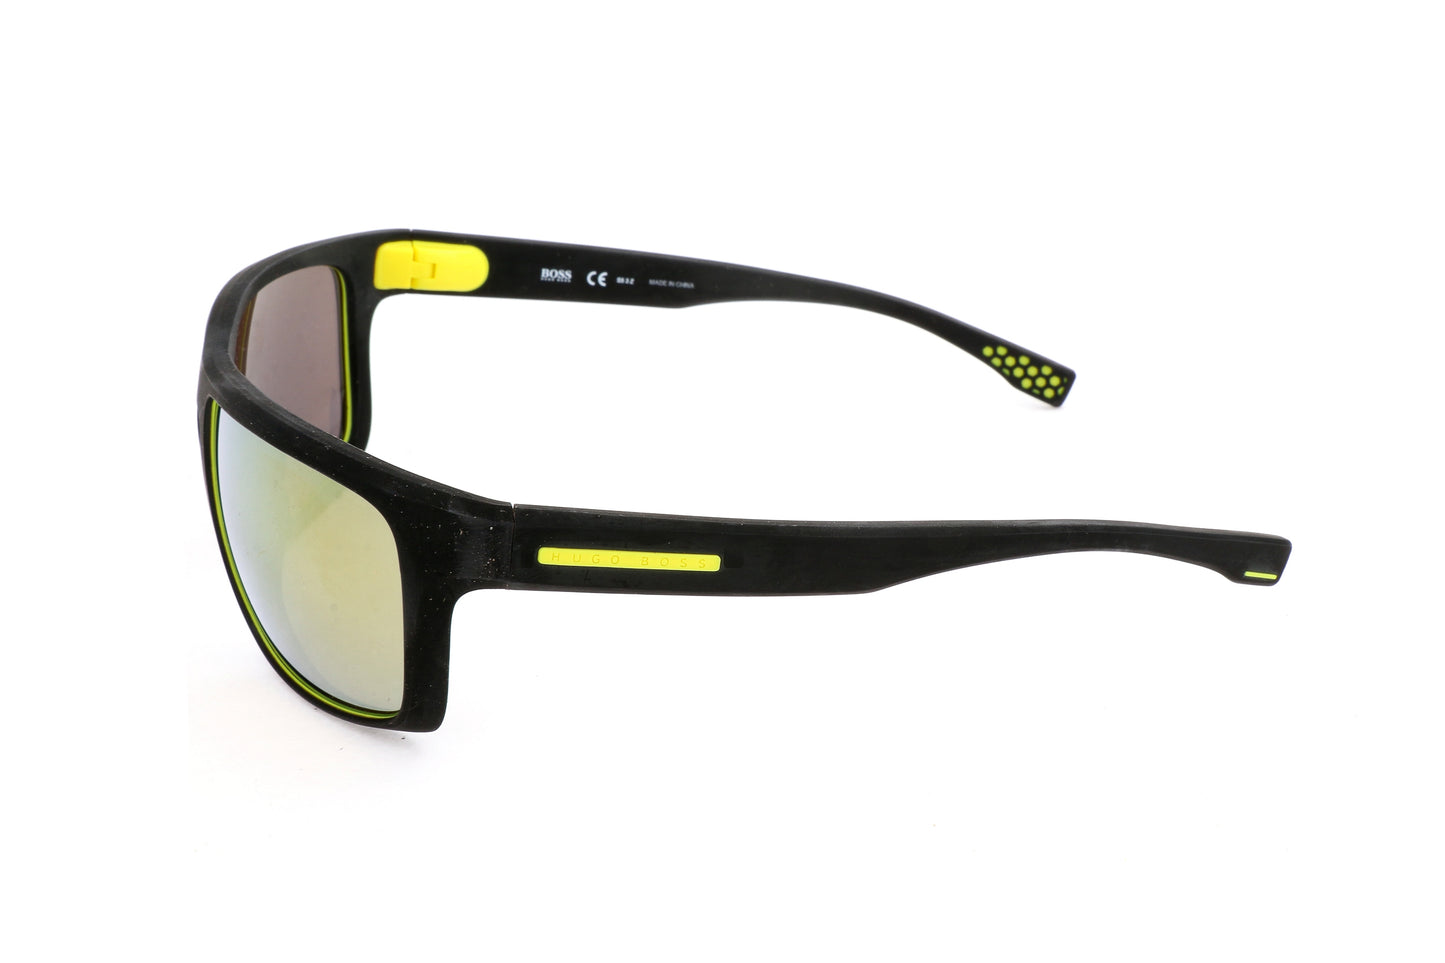 Hugo Boss Mens Sunglasses BOSS 0800 S UDK 58 19 130 RUBBER BLACK YELLOW